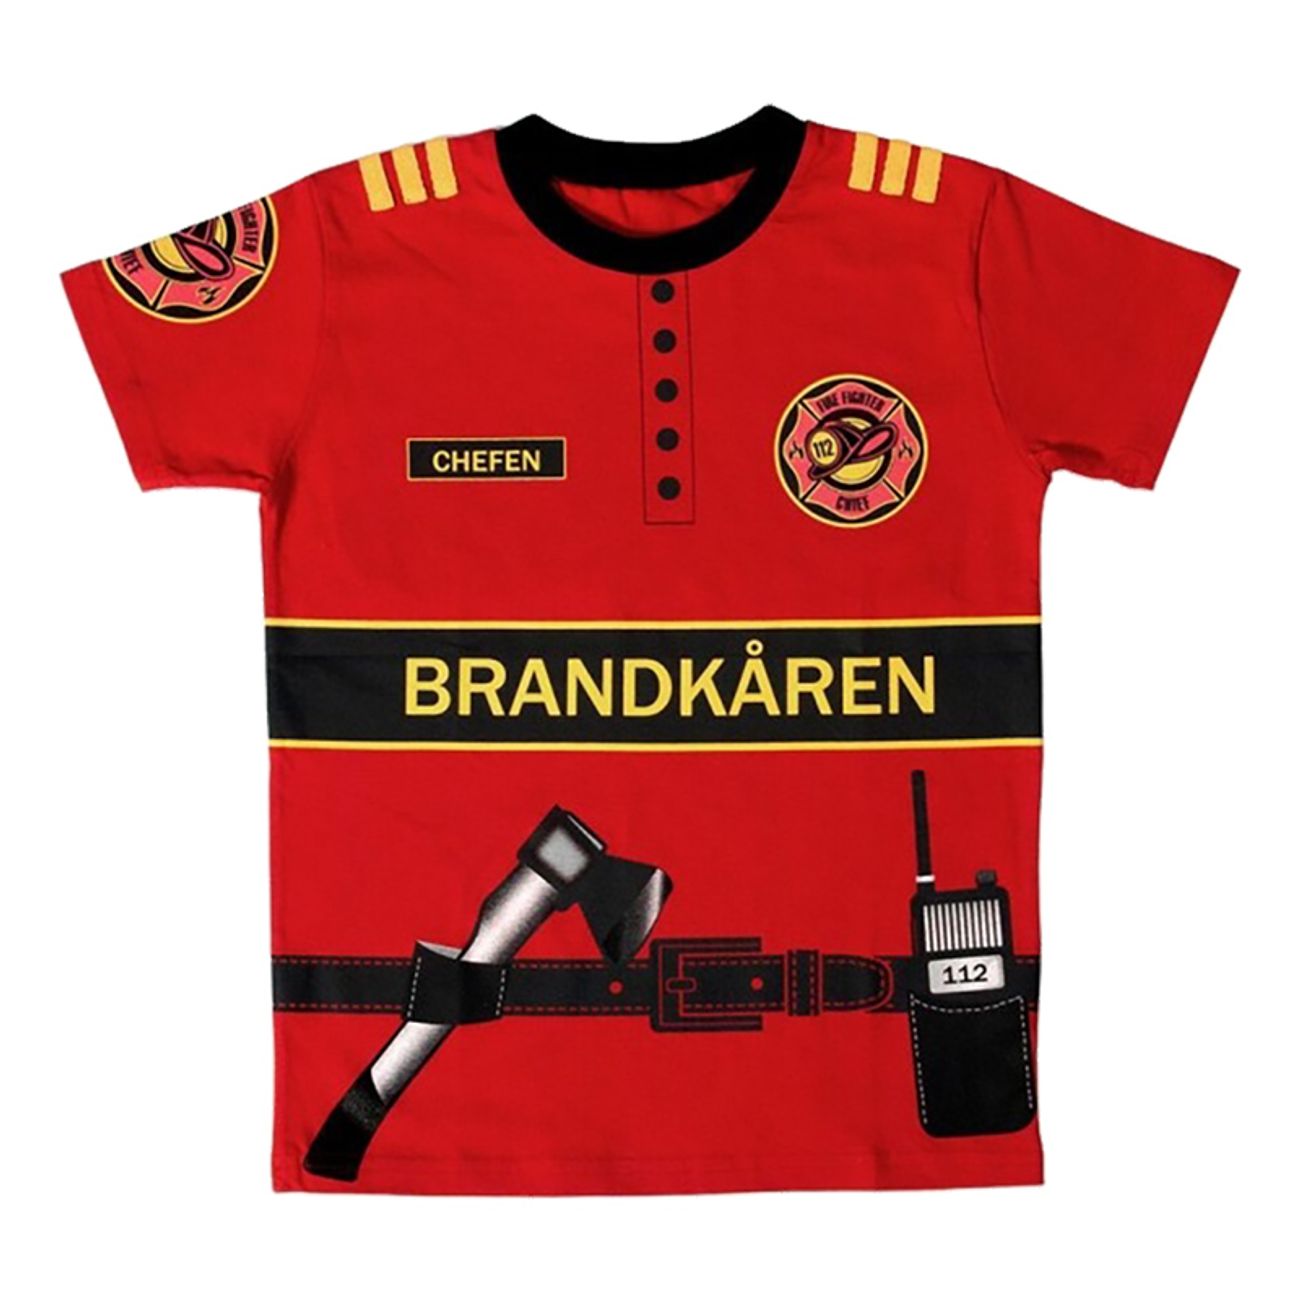 brandman-t-shirt-barn-7